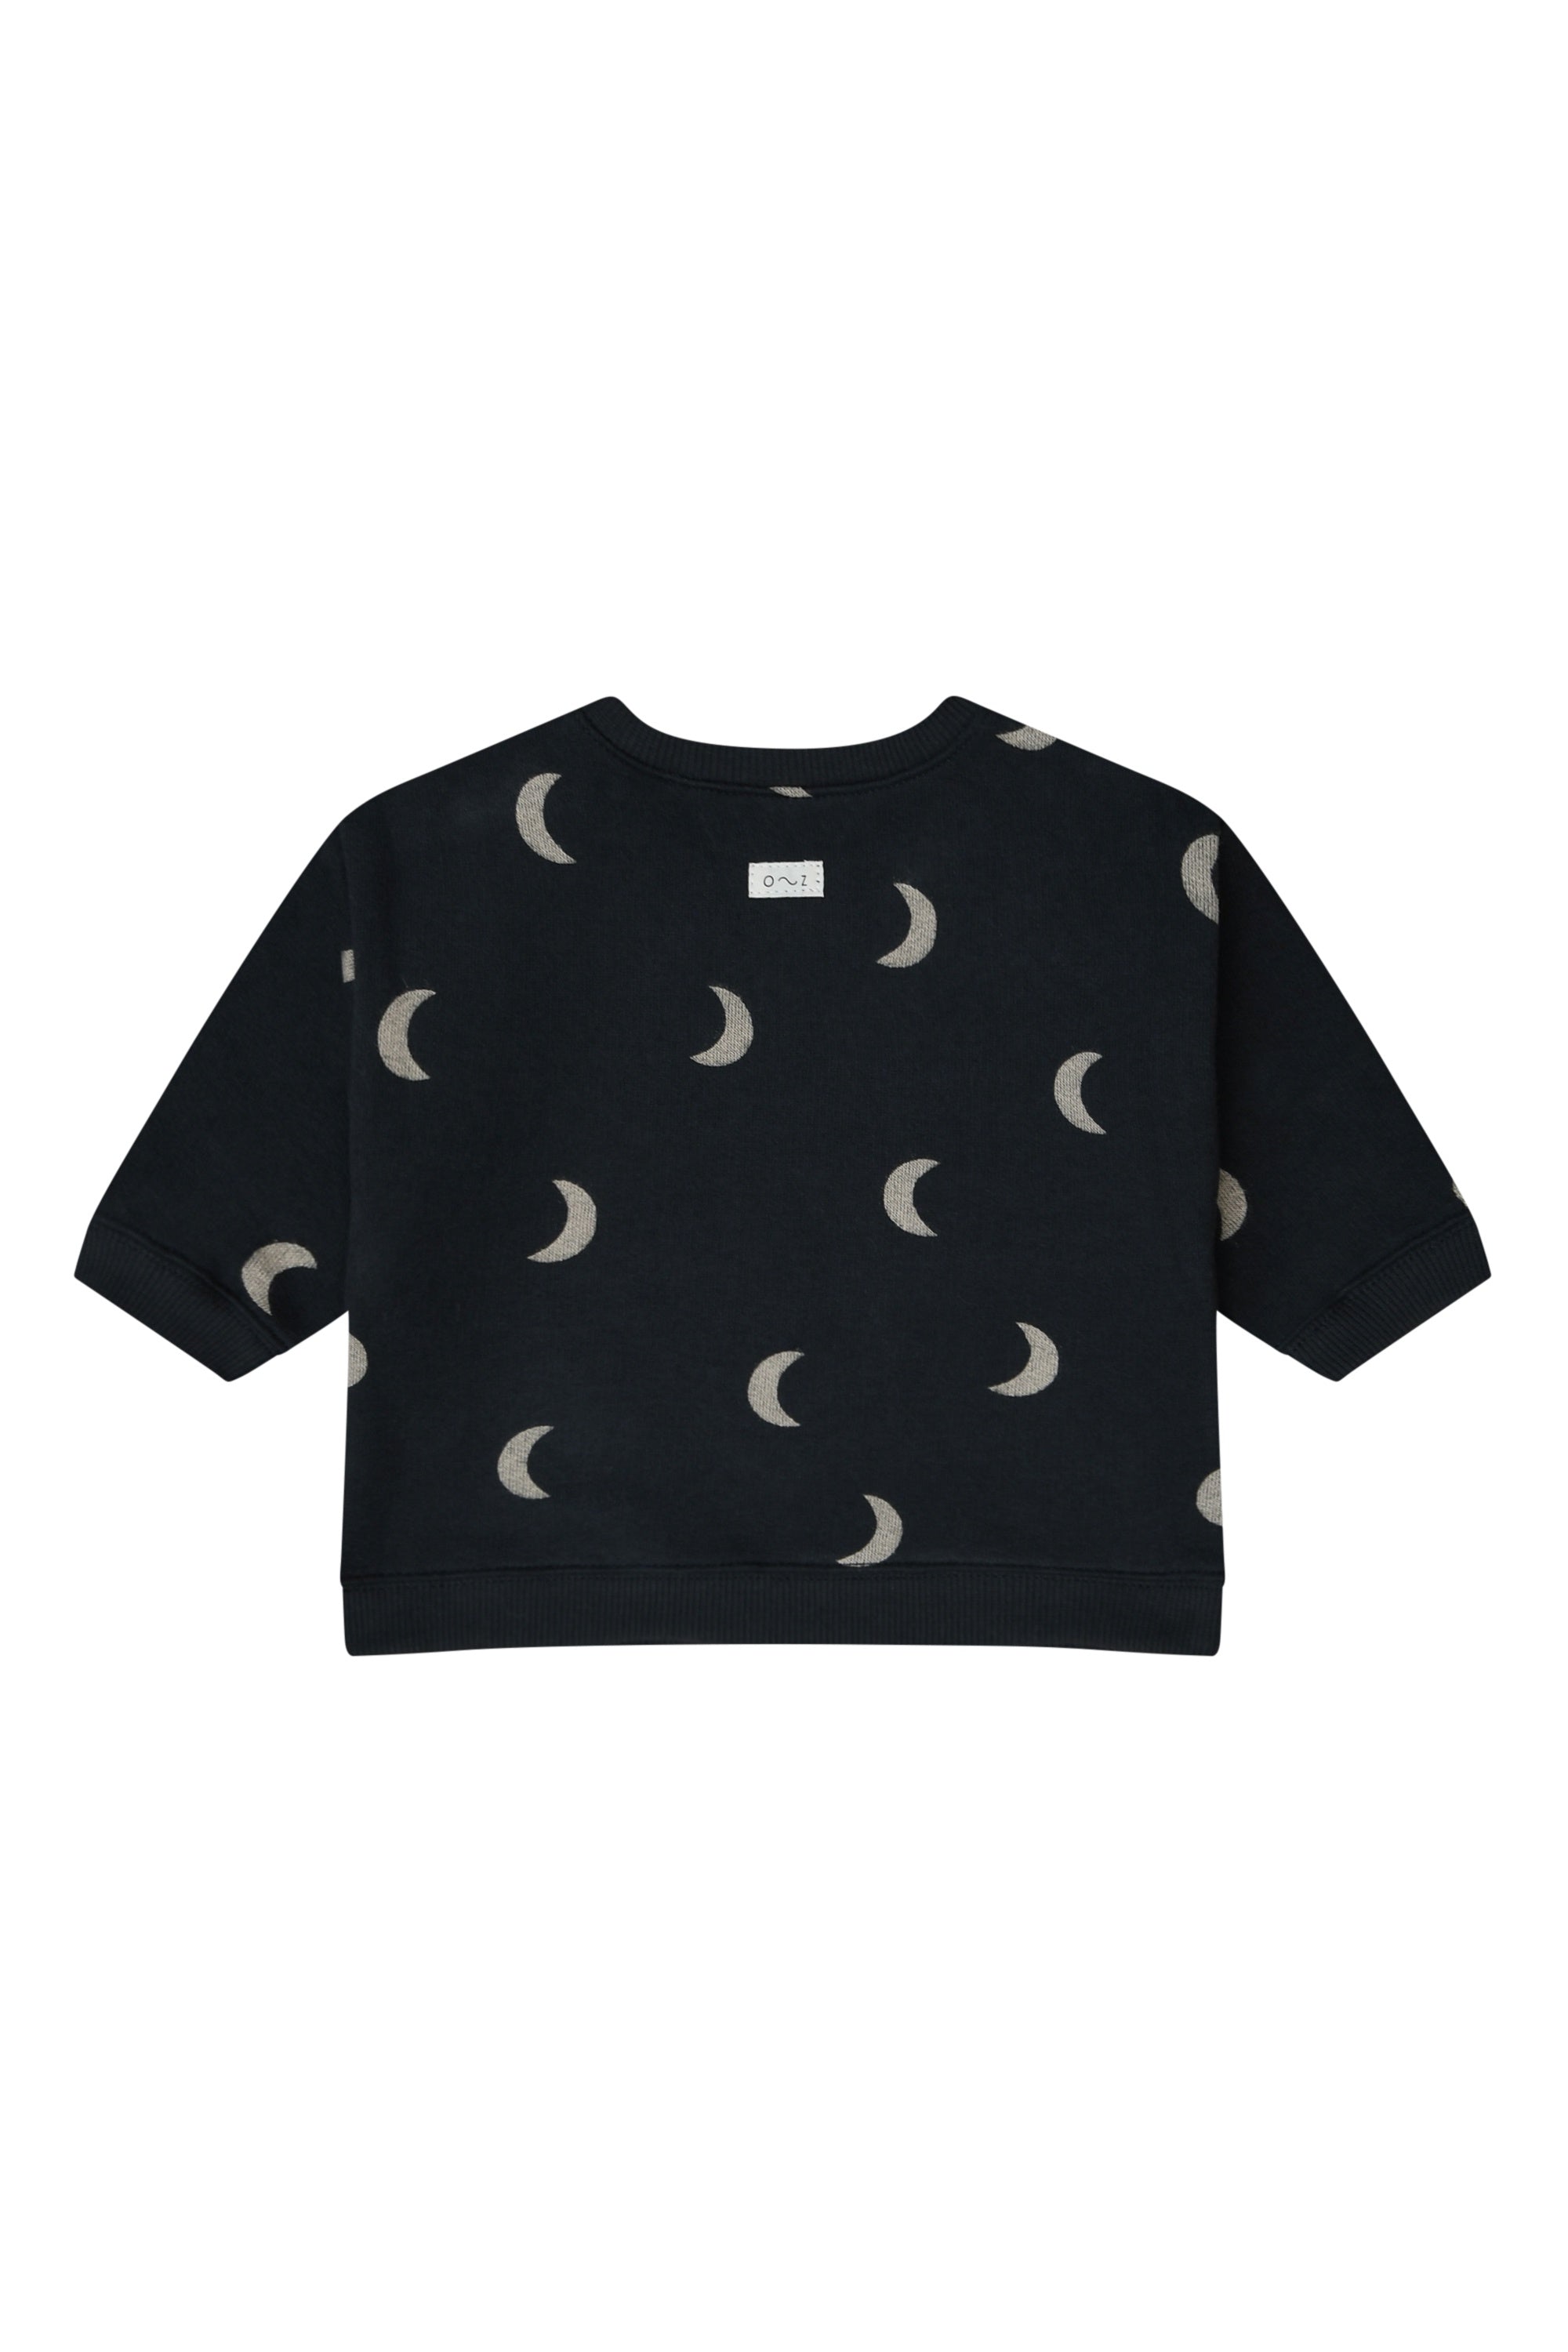 Charcoal Midnight Sweatshirt | Organic Zoo